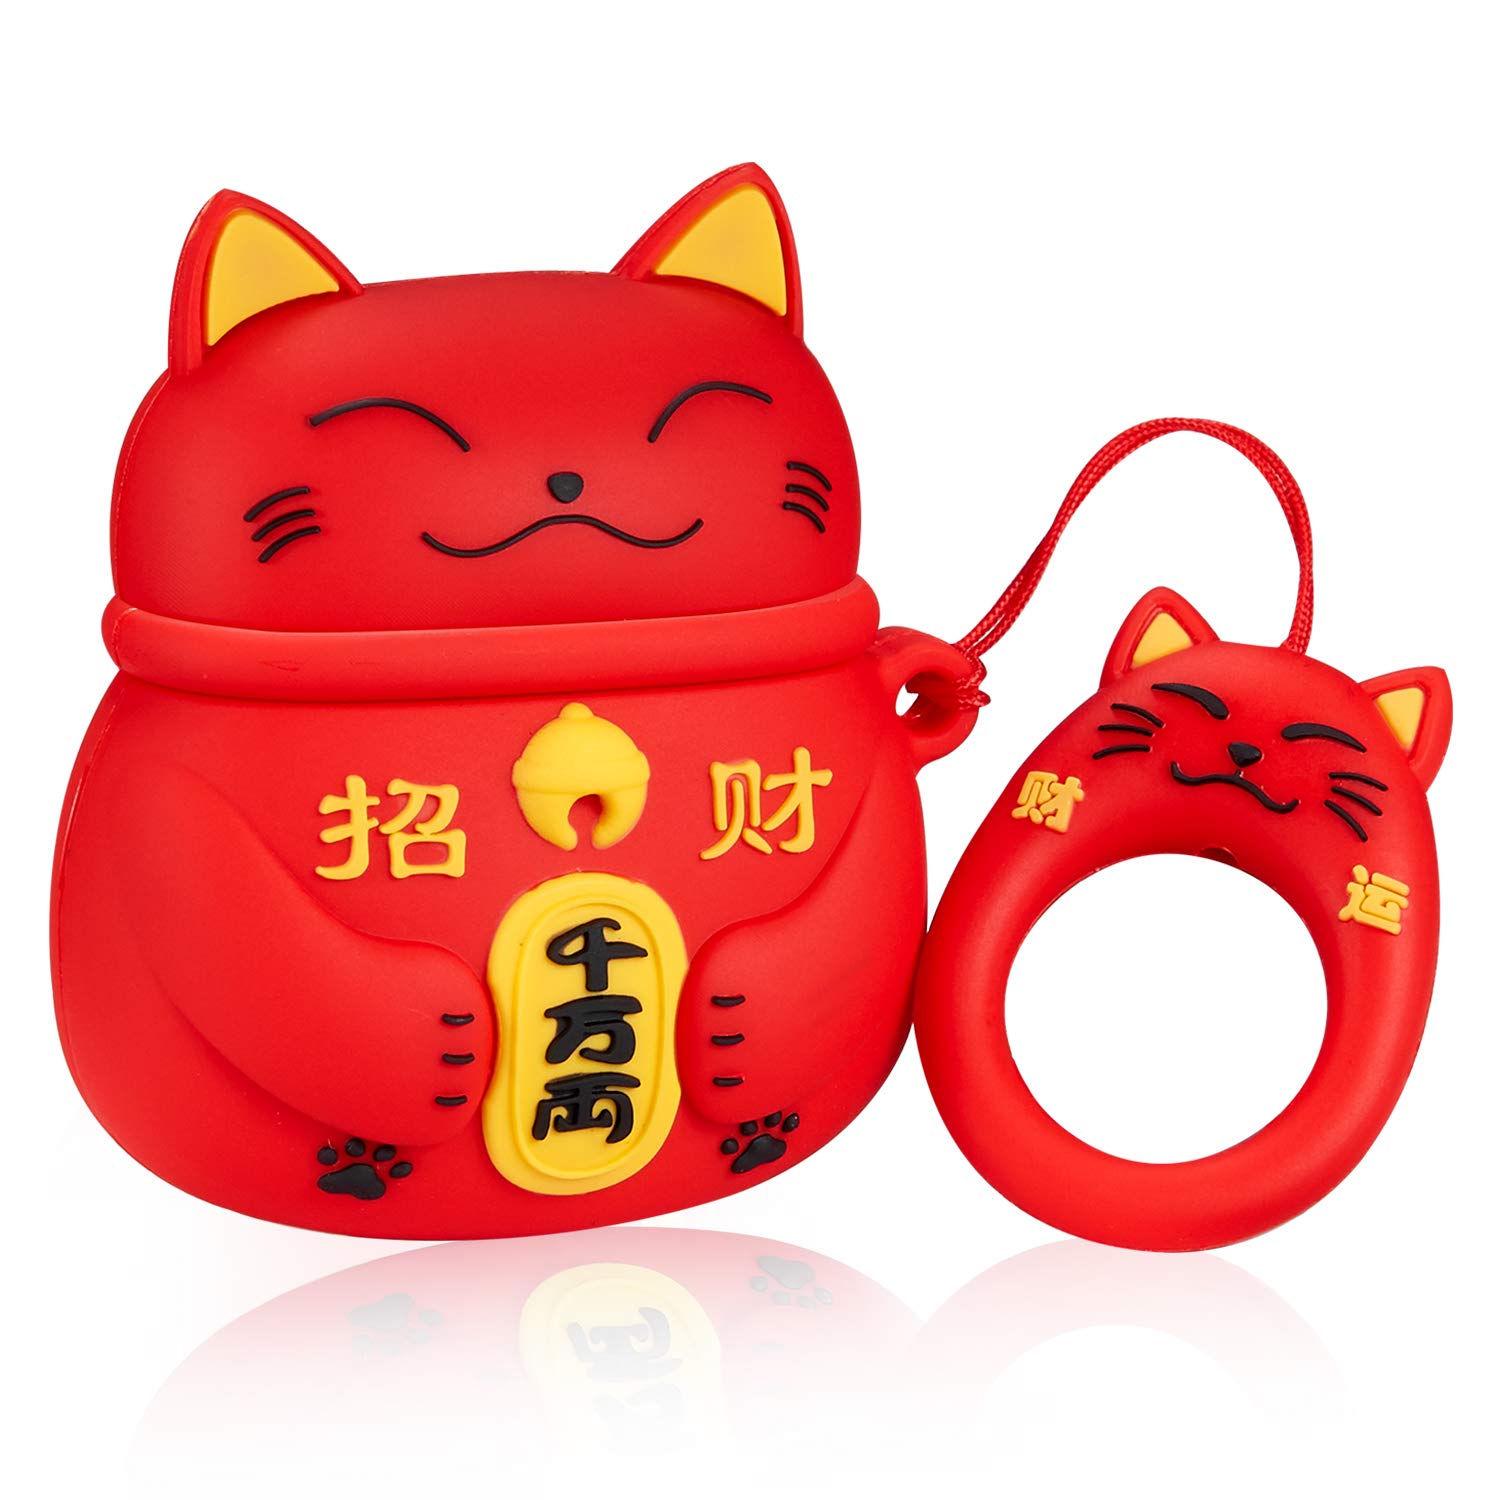 Red Maneki-neko Lucky Cat Airpods Case